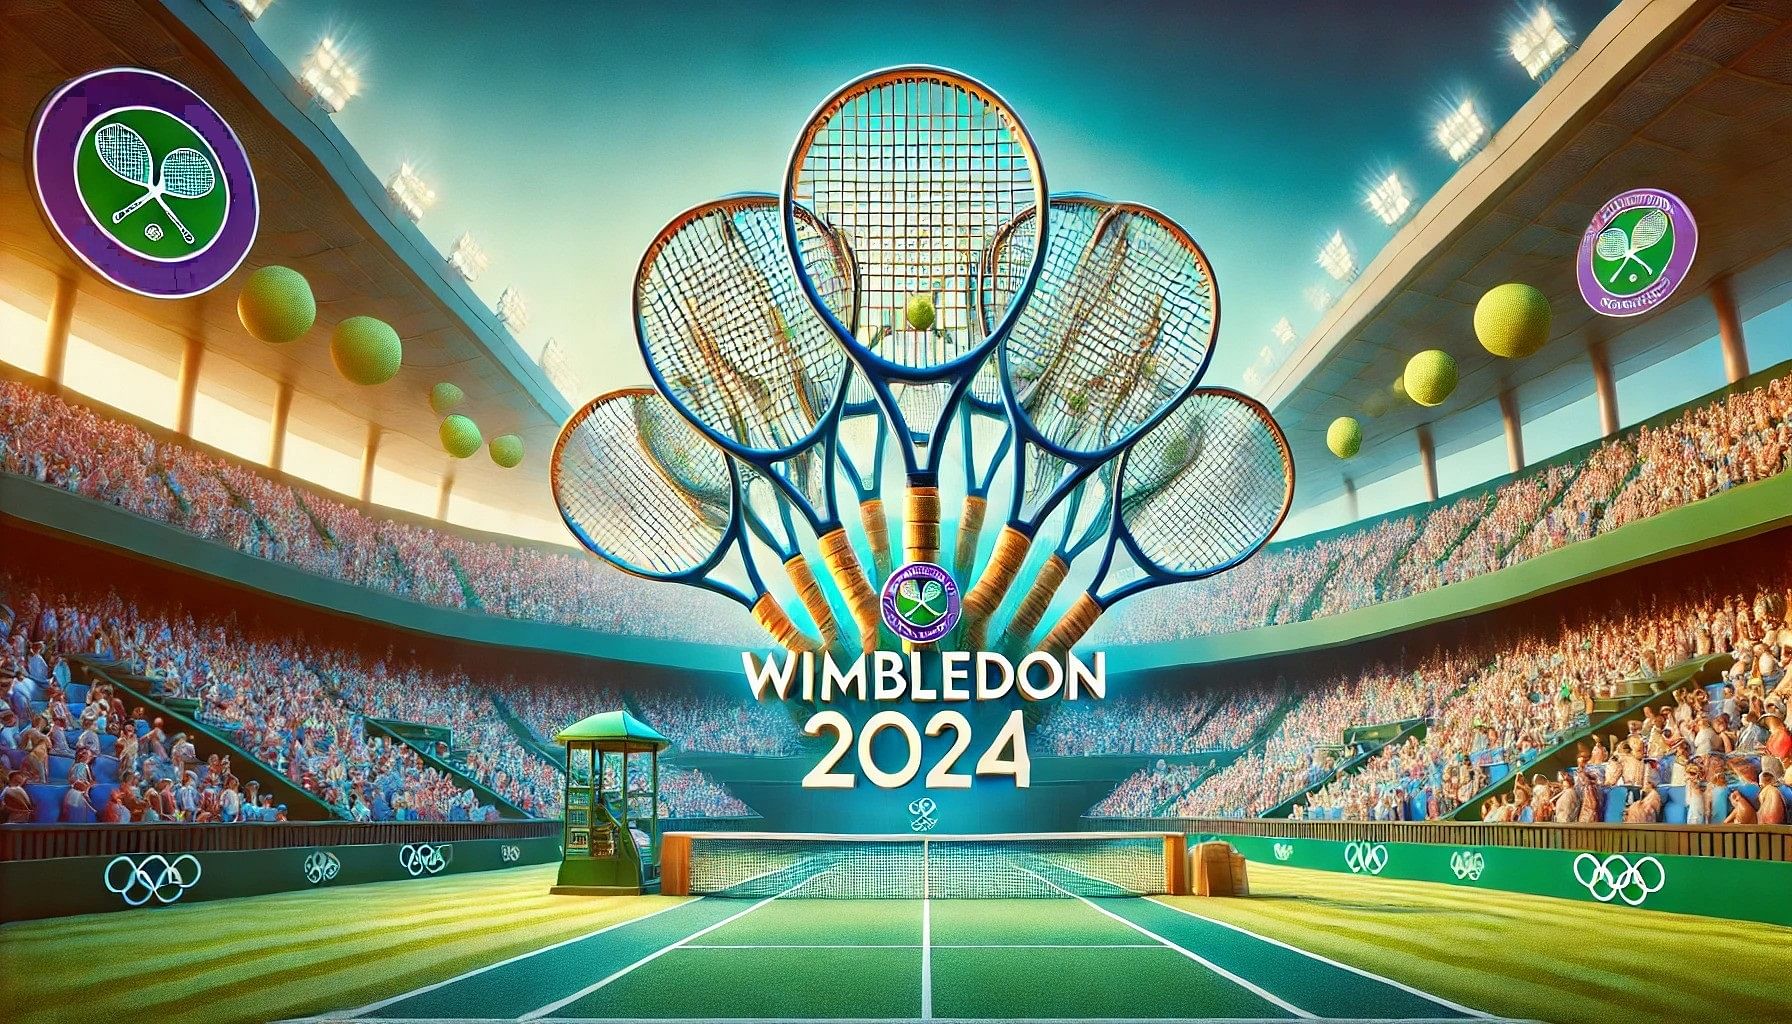 Wimbledon 2024: A Showcase of Tennis Excellence